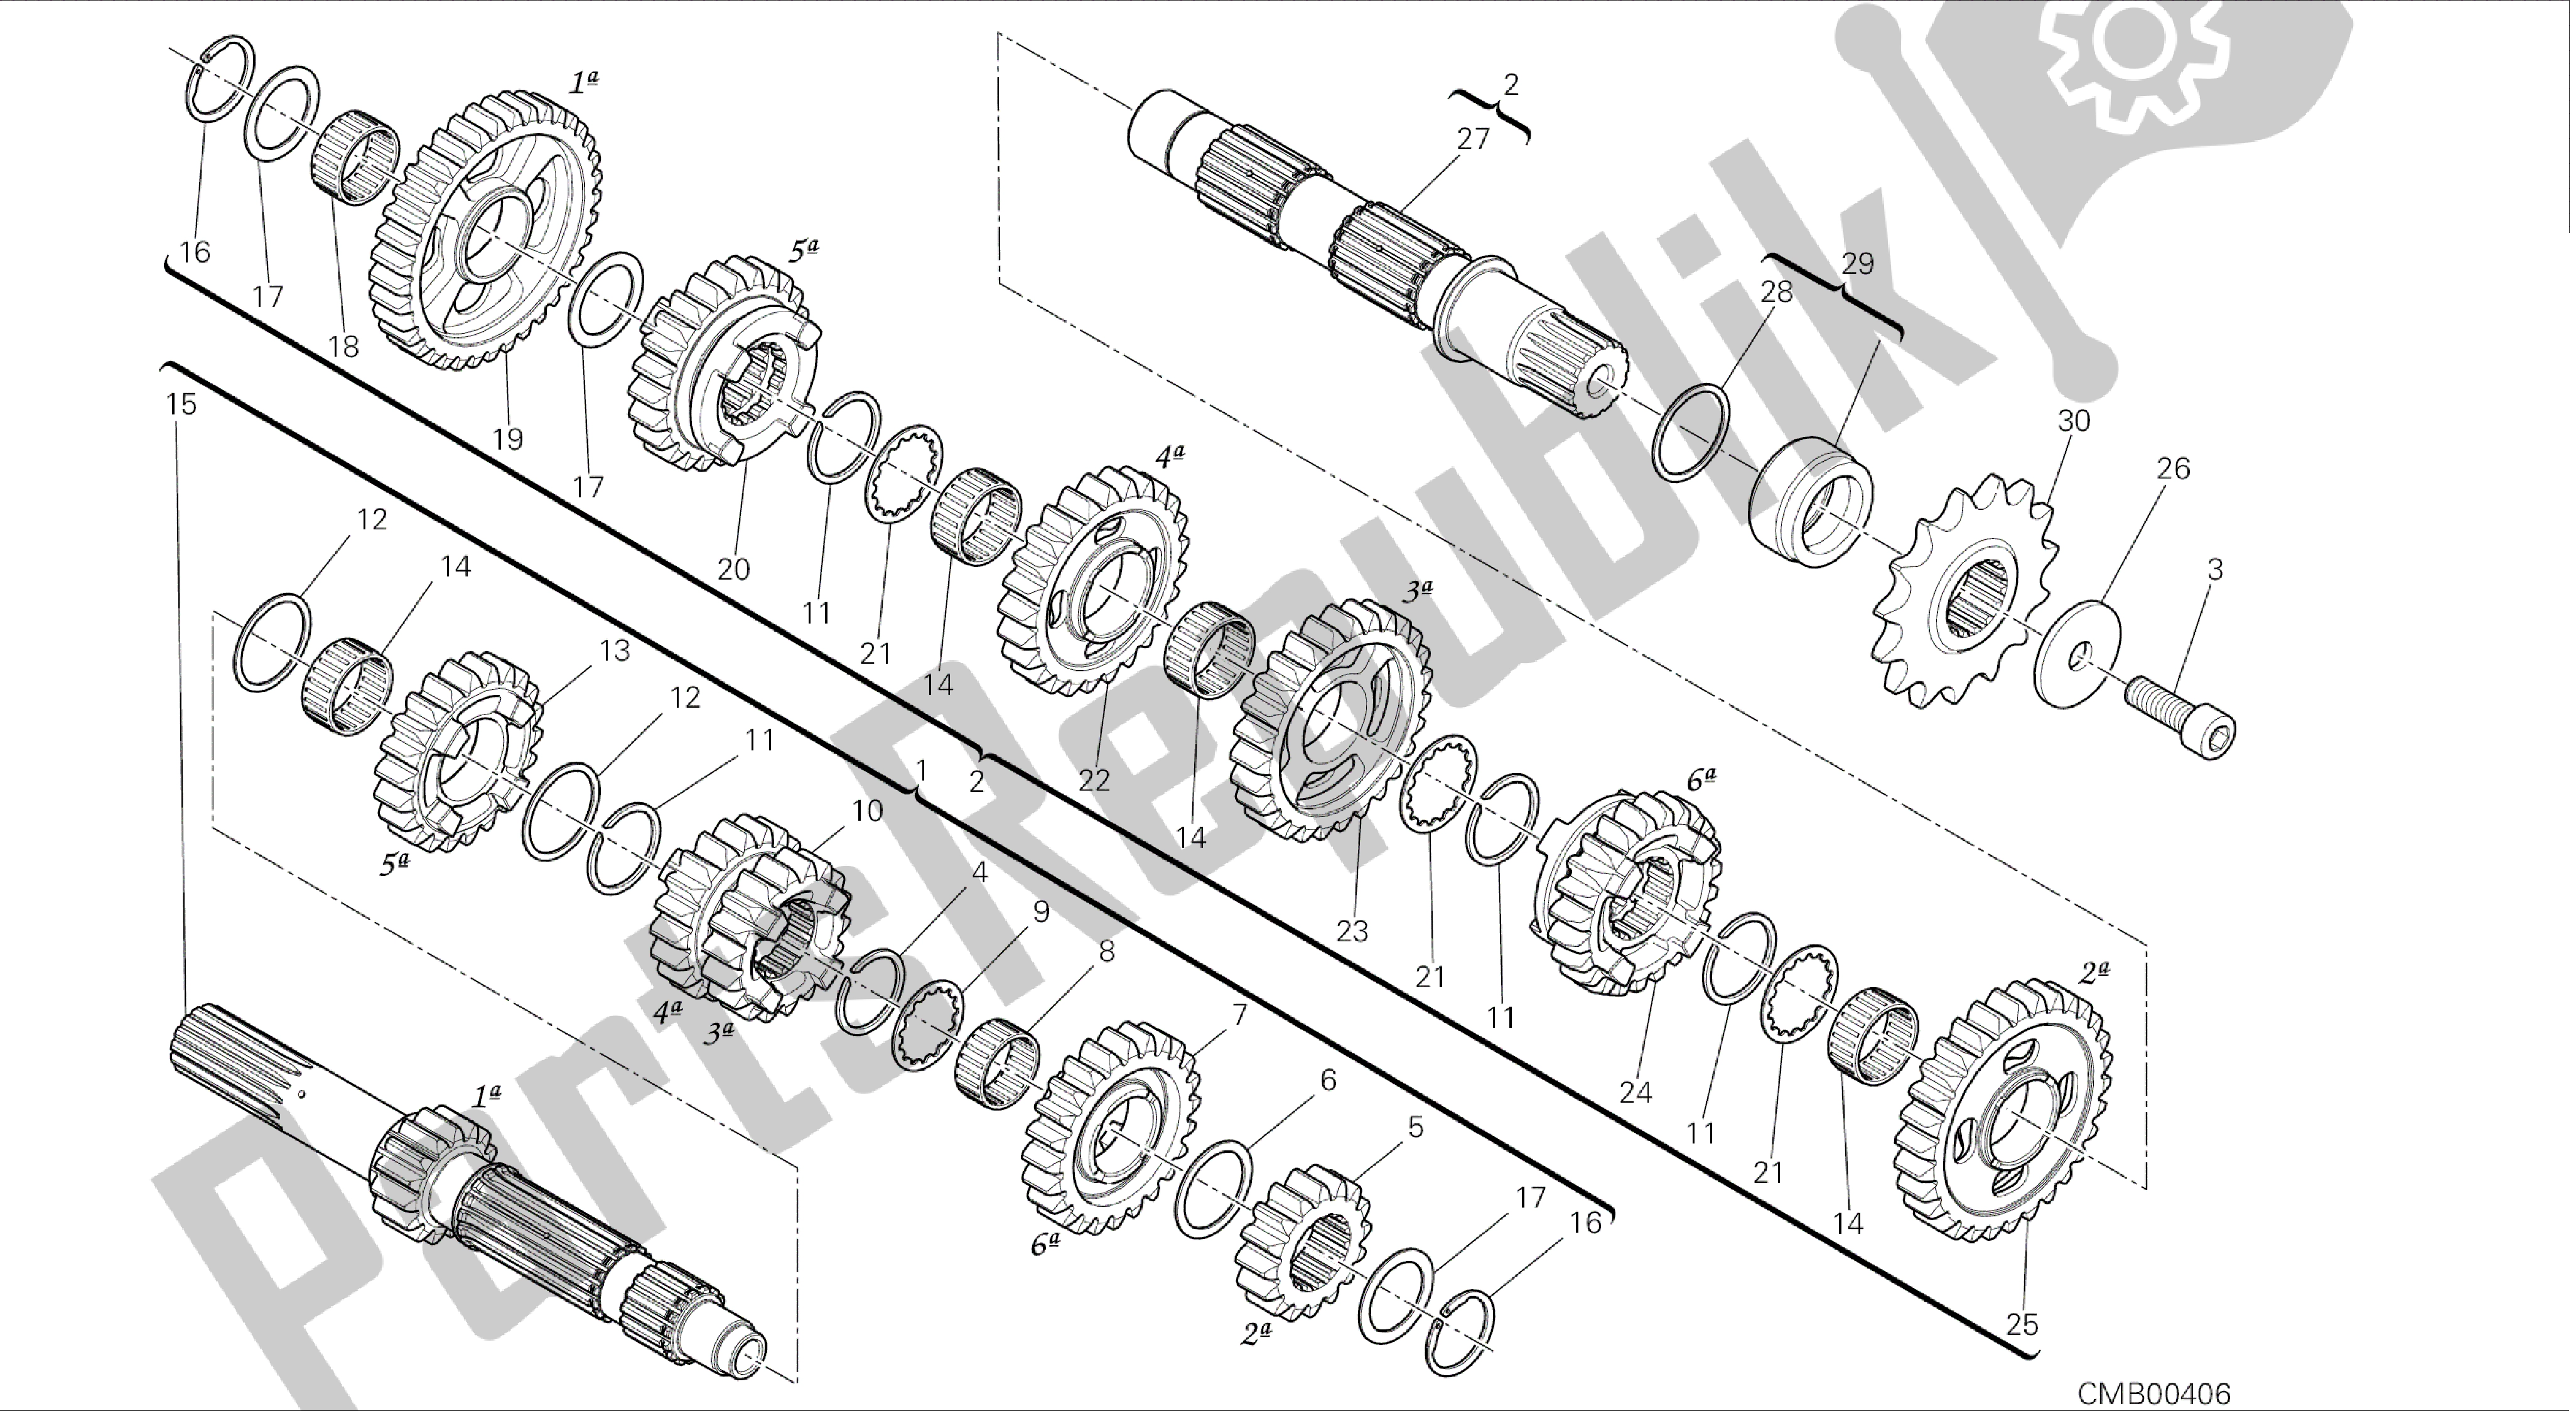 Alle onderdelen voor de Tekening 003 - Versnellingsbak [mod: 899 Abs; Xst: Aus, Eur, Fra, Jap, Twn] Groepsmotor van de Ducati Panigale 899 2014